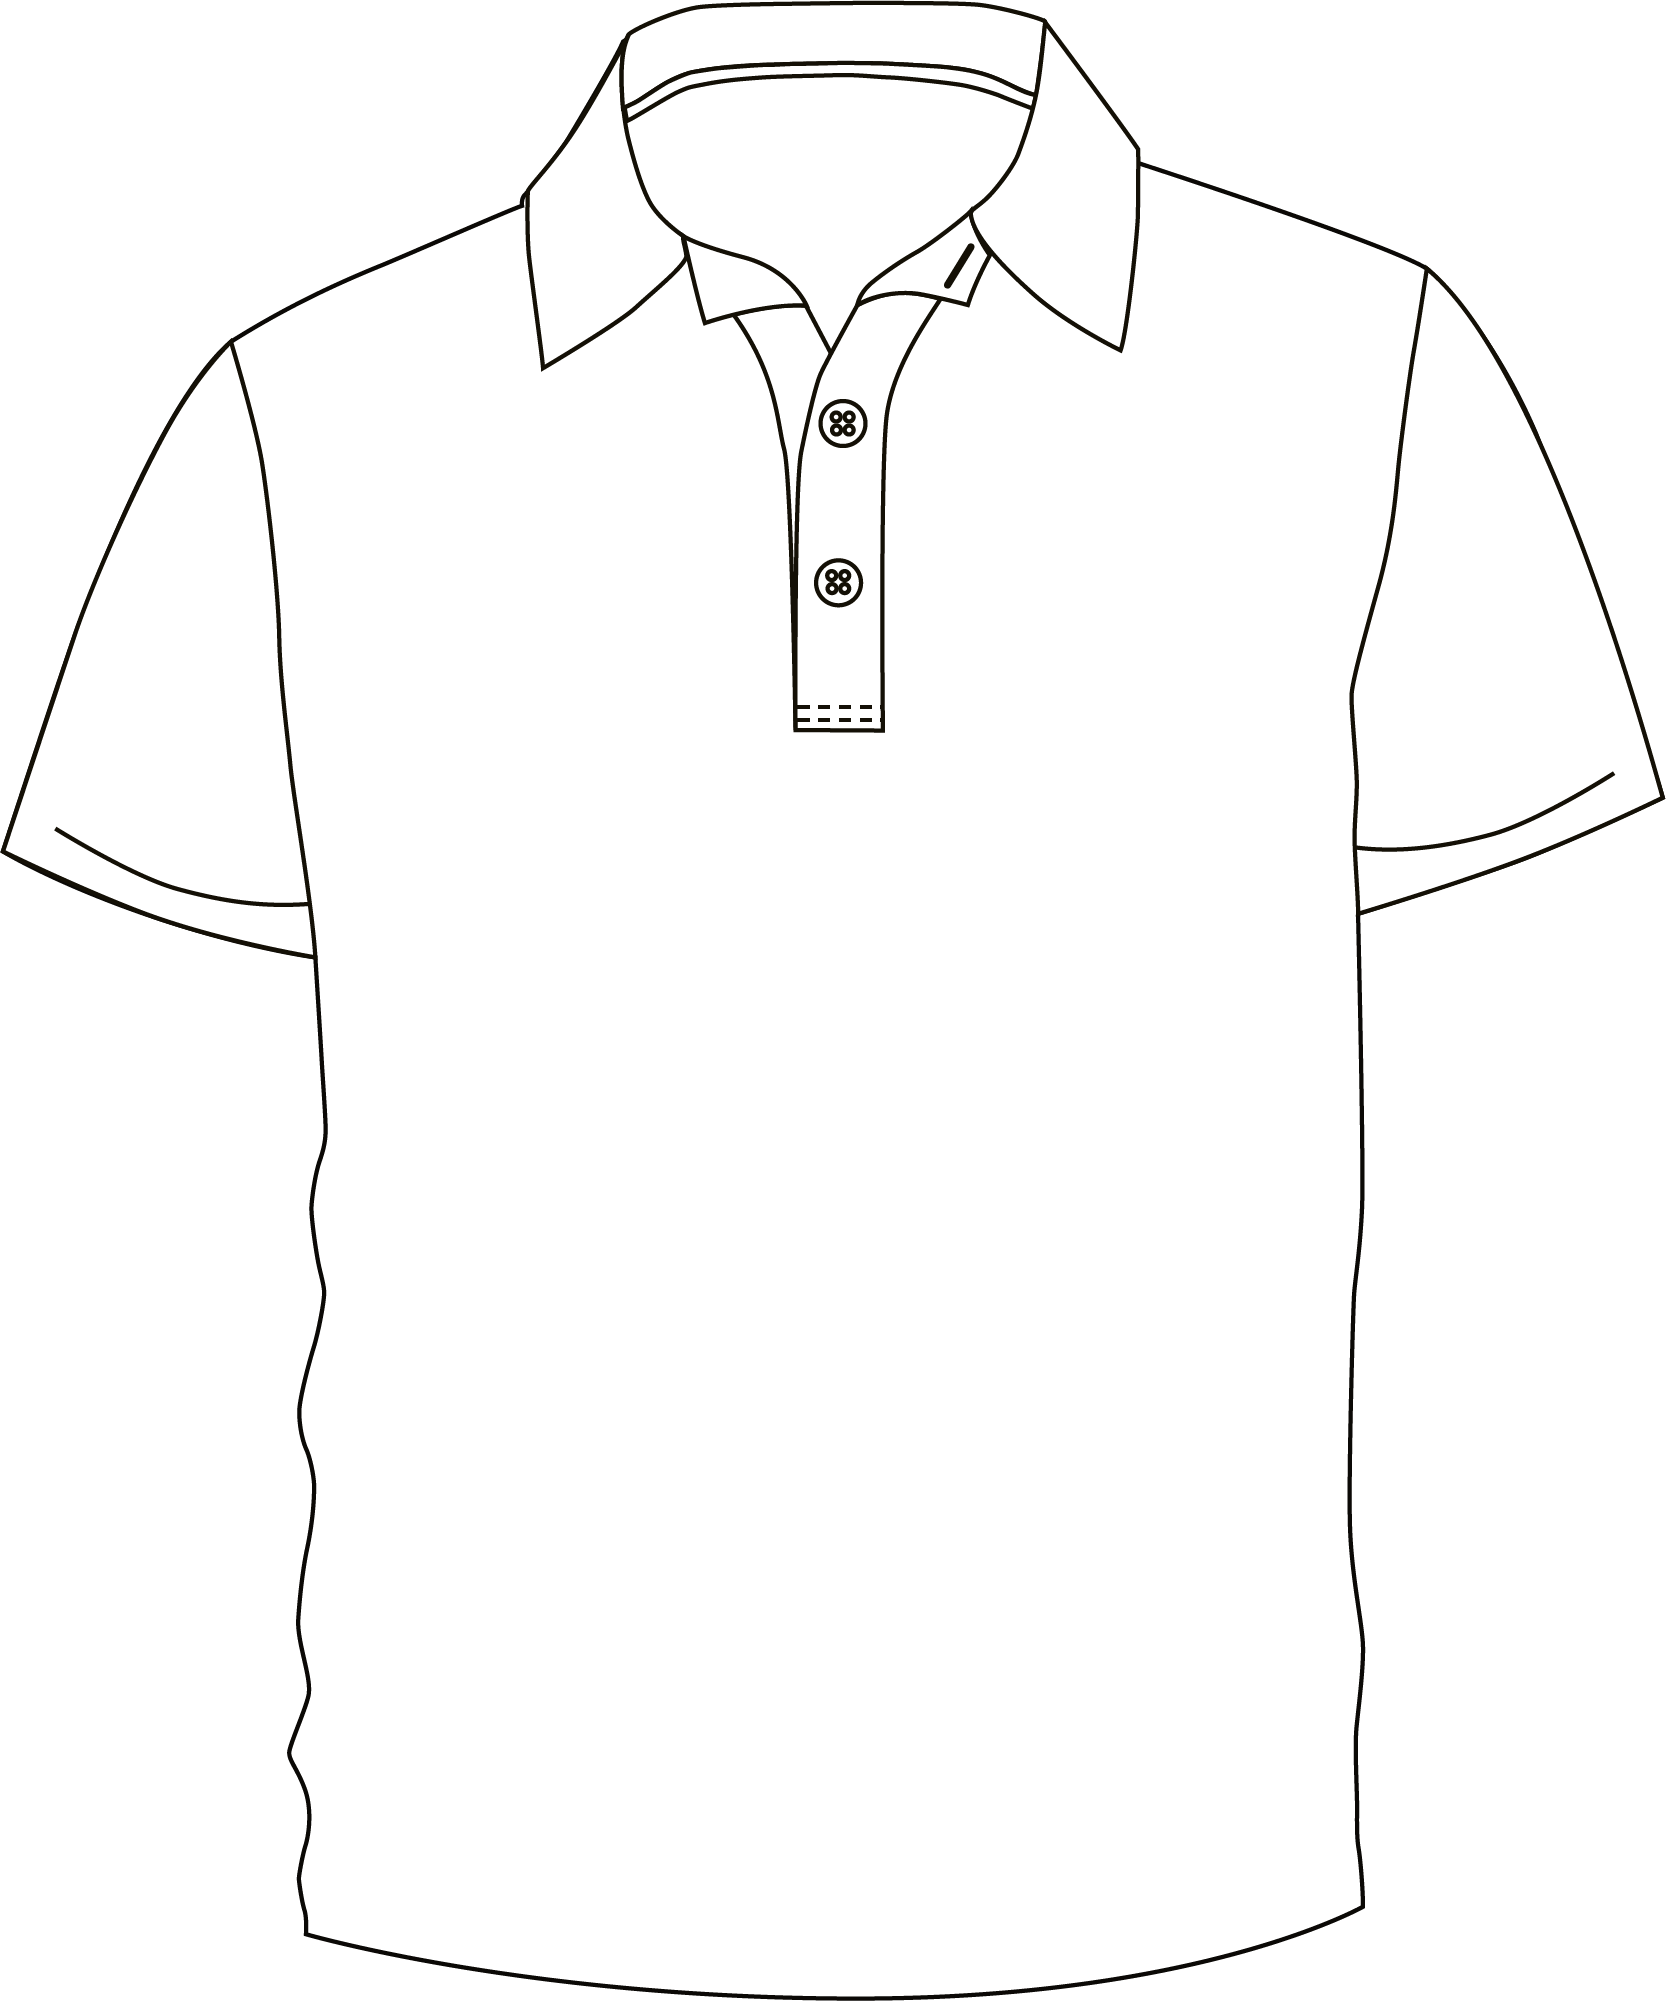 Design Your Own Shirt With Our Custom Shirt Designer Rhode Island Apparel